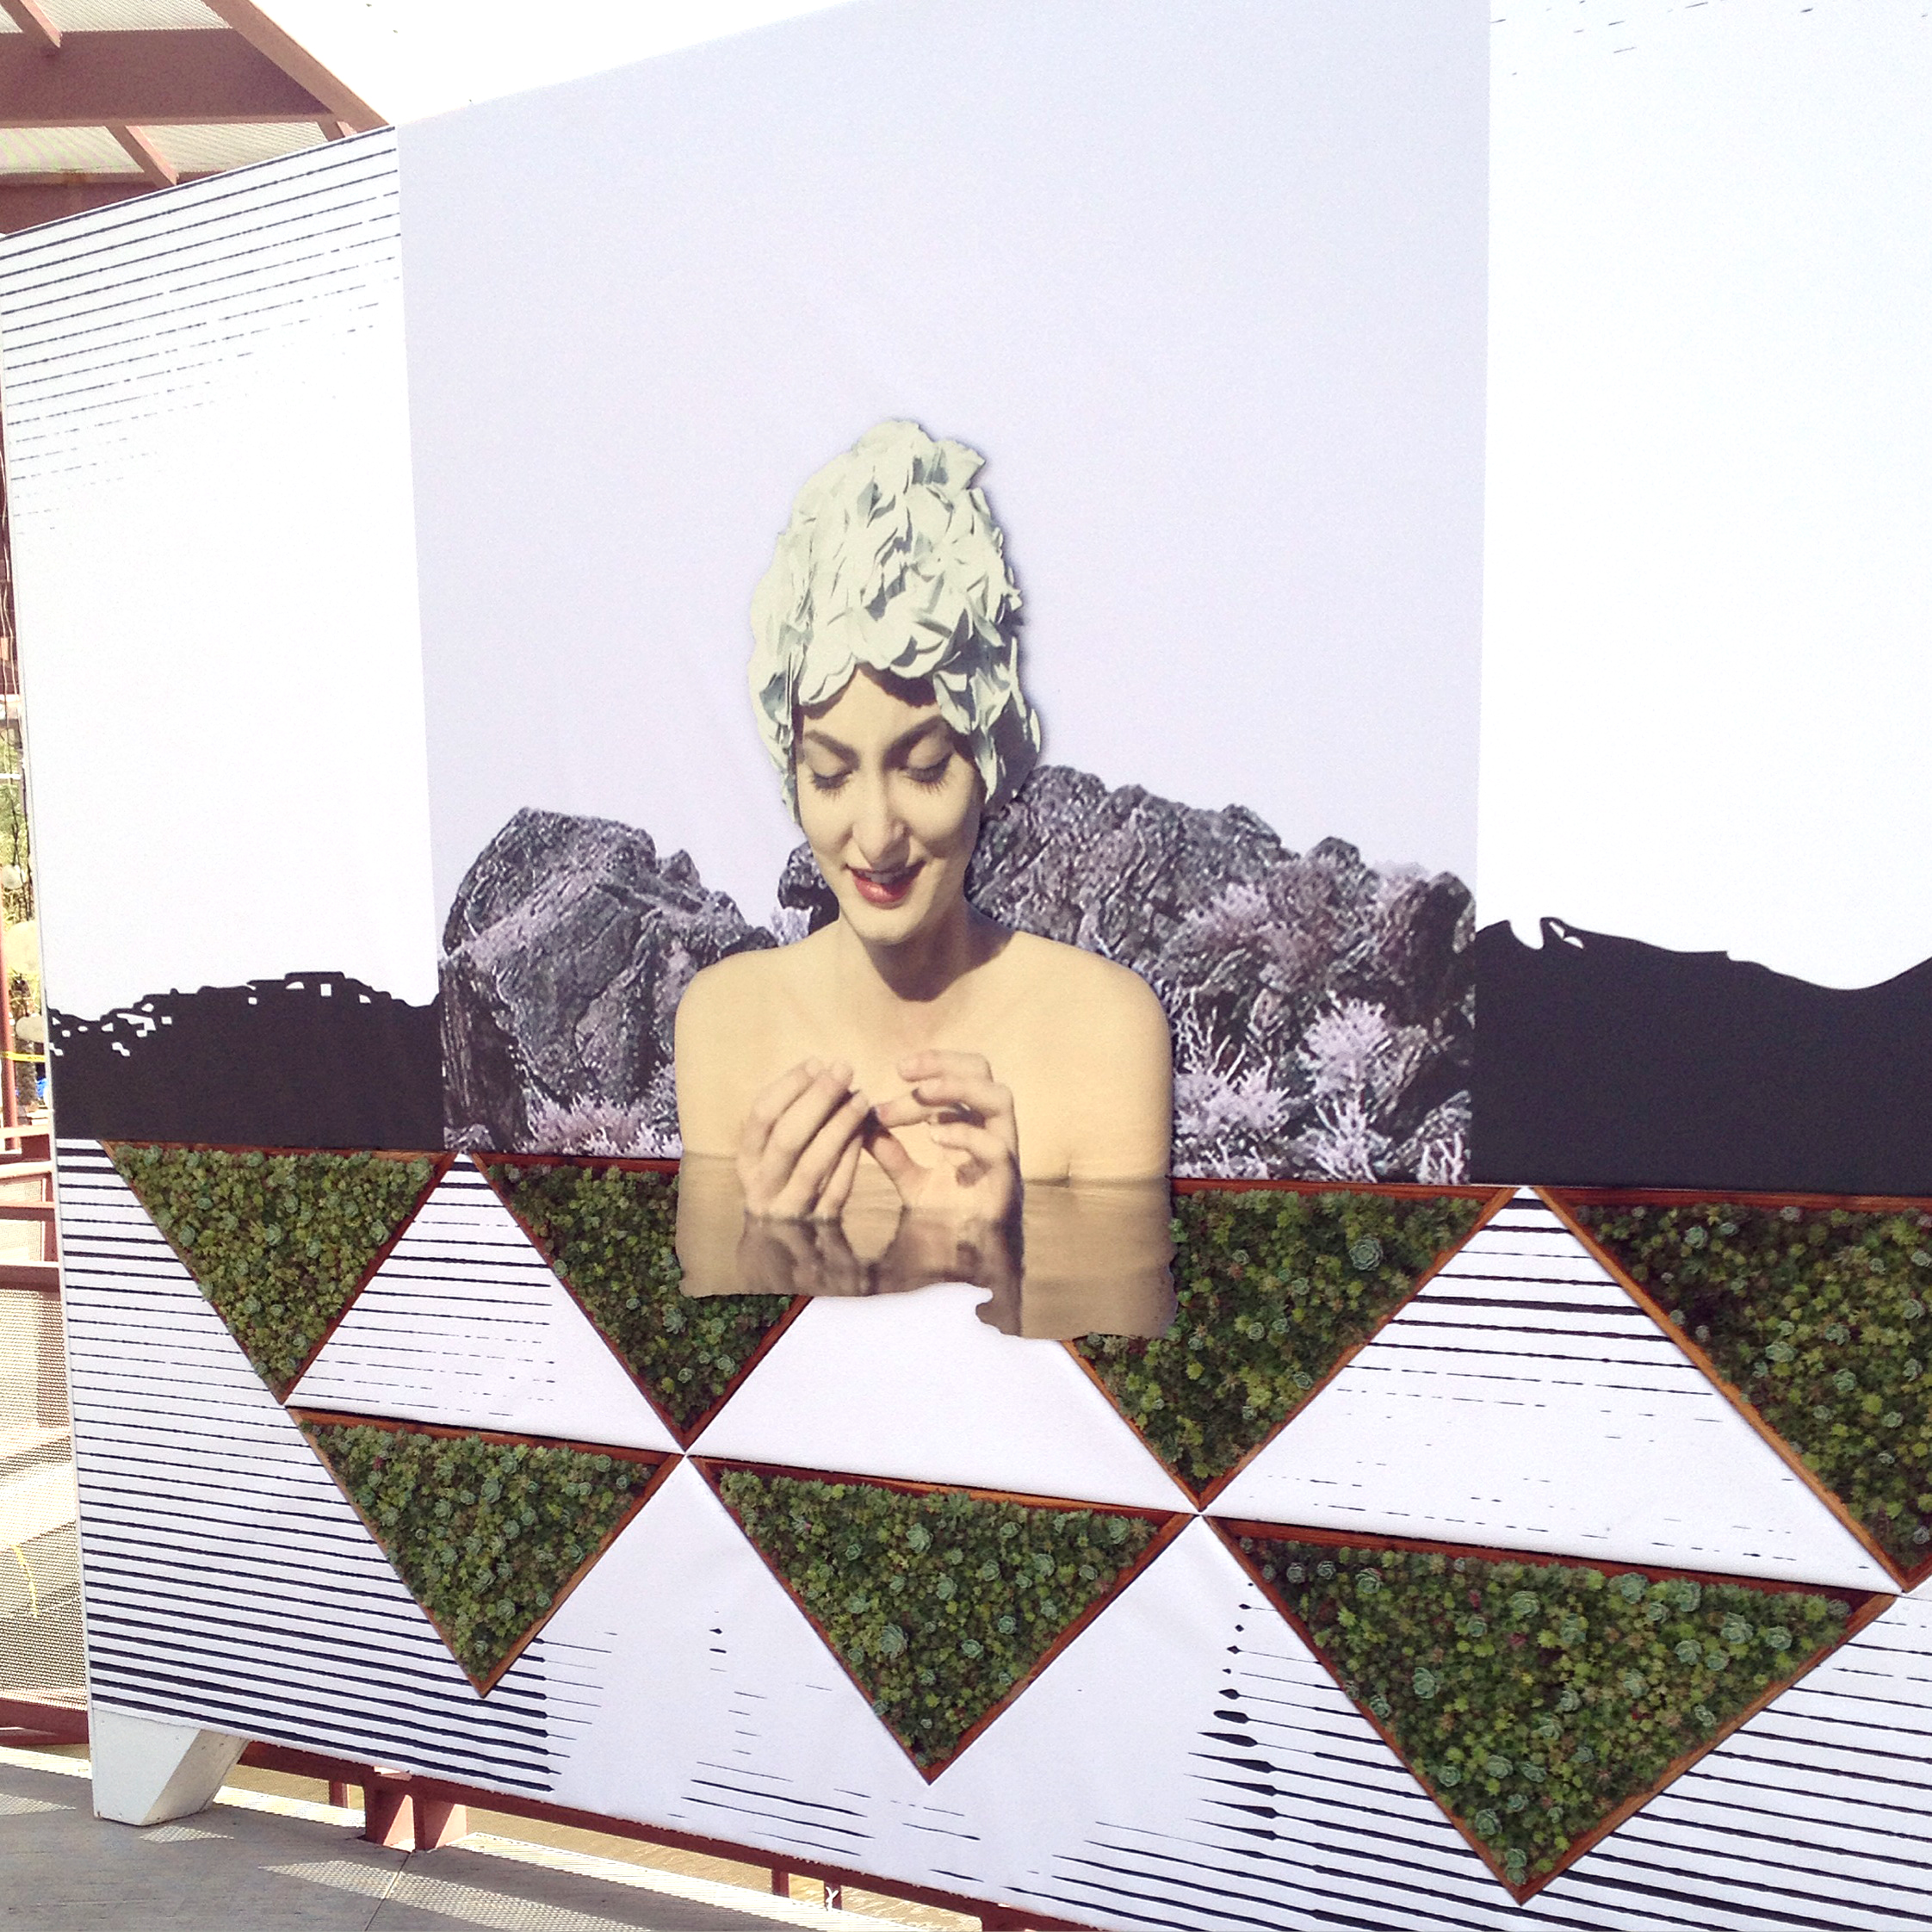  Mixed-media public art installation with succulents. Scottsdale, Arizona 